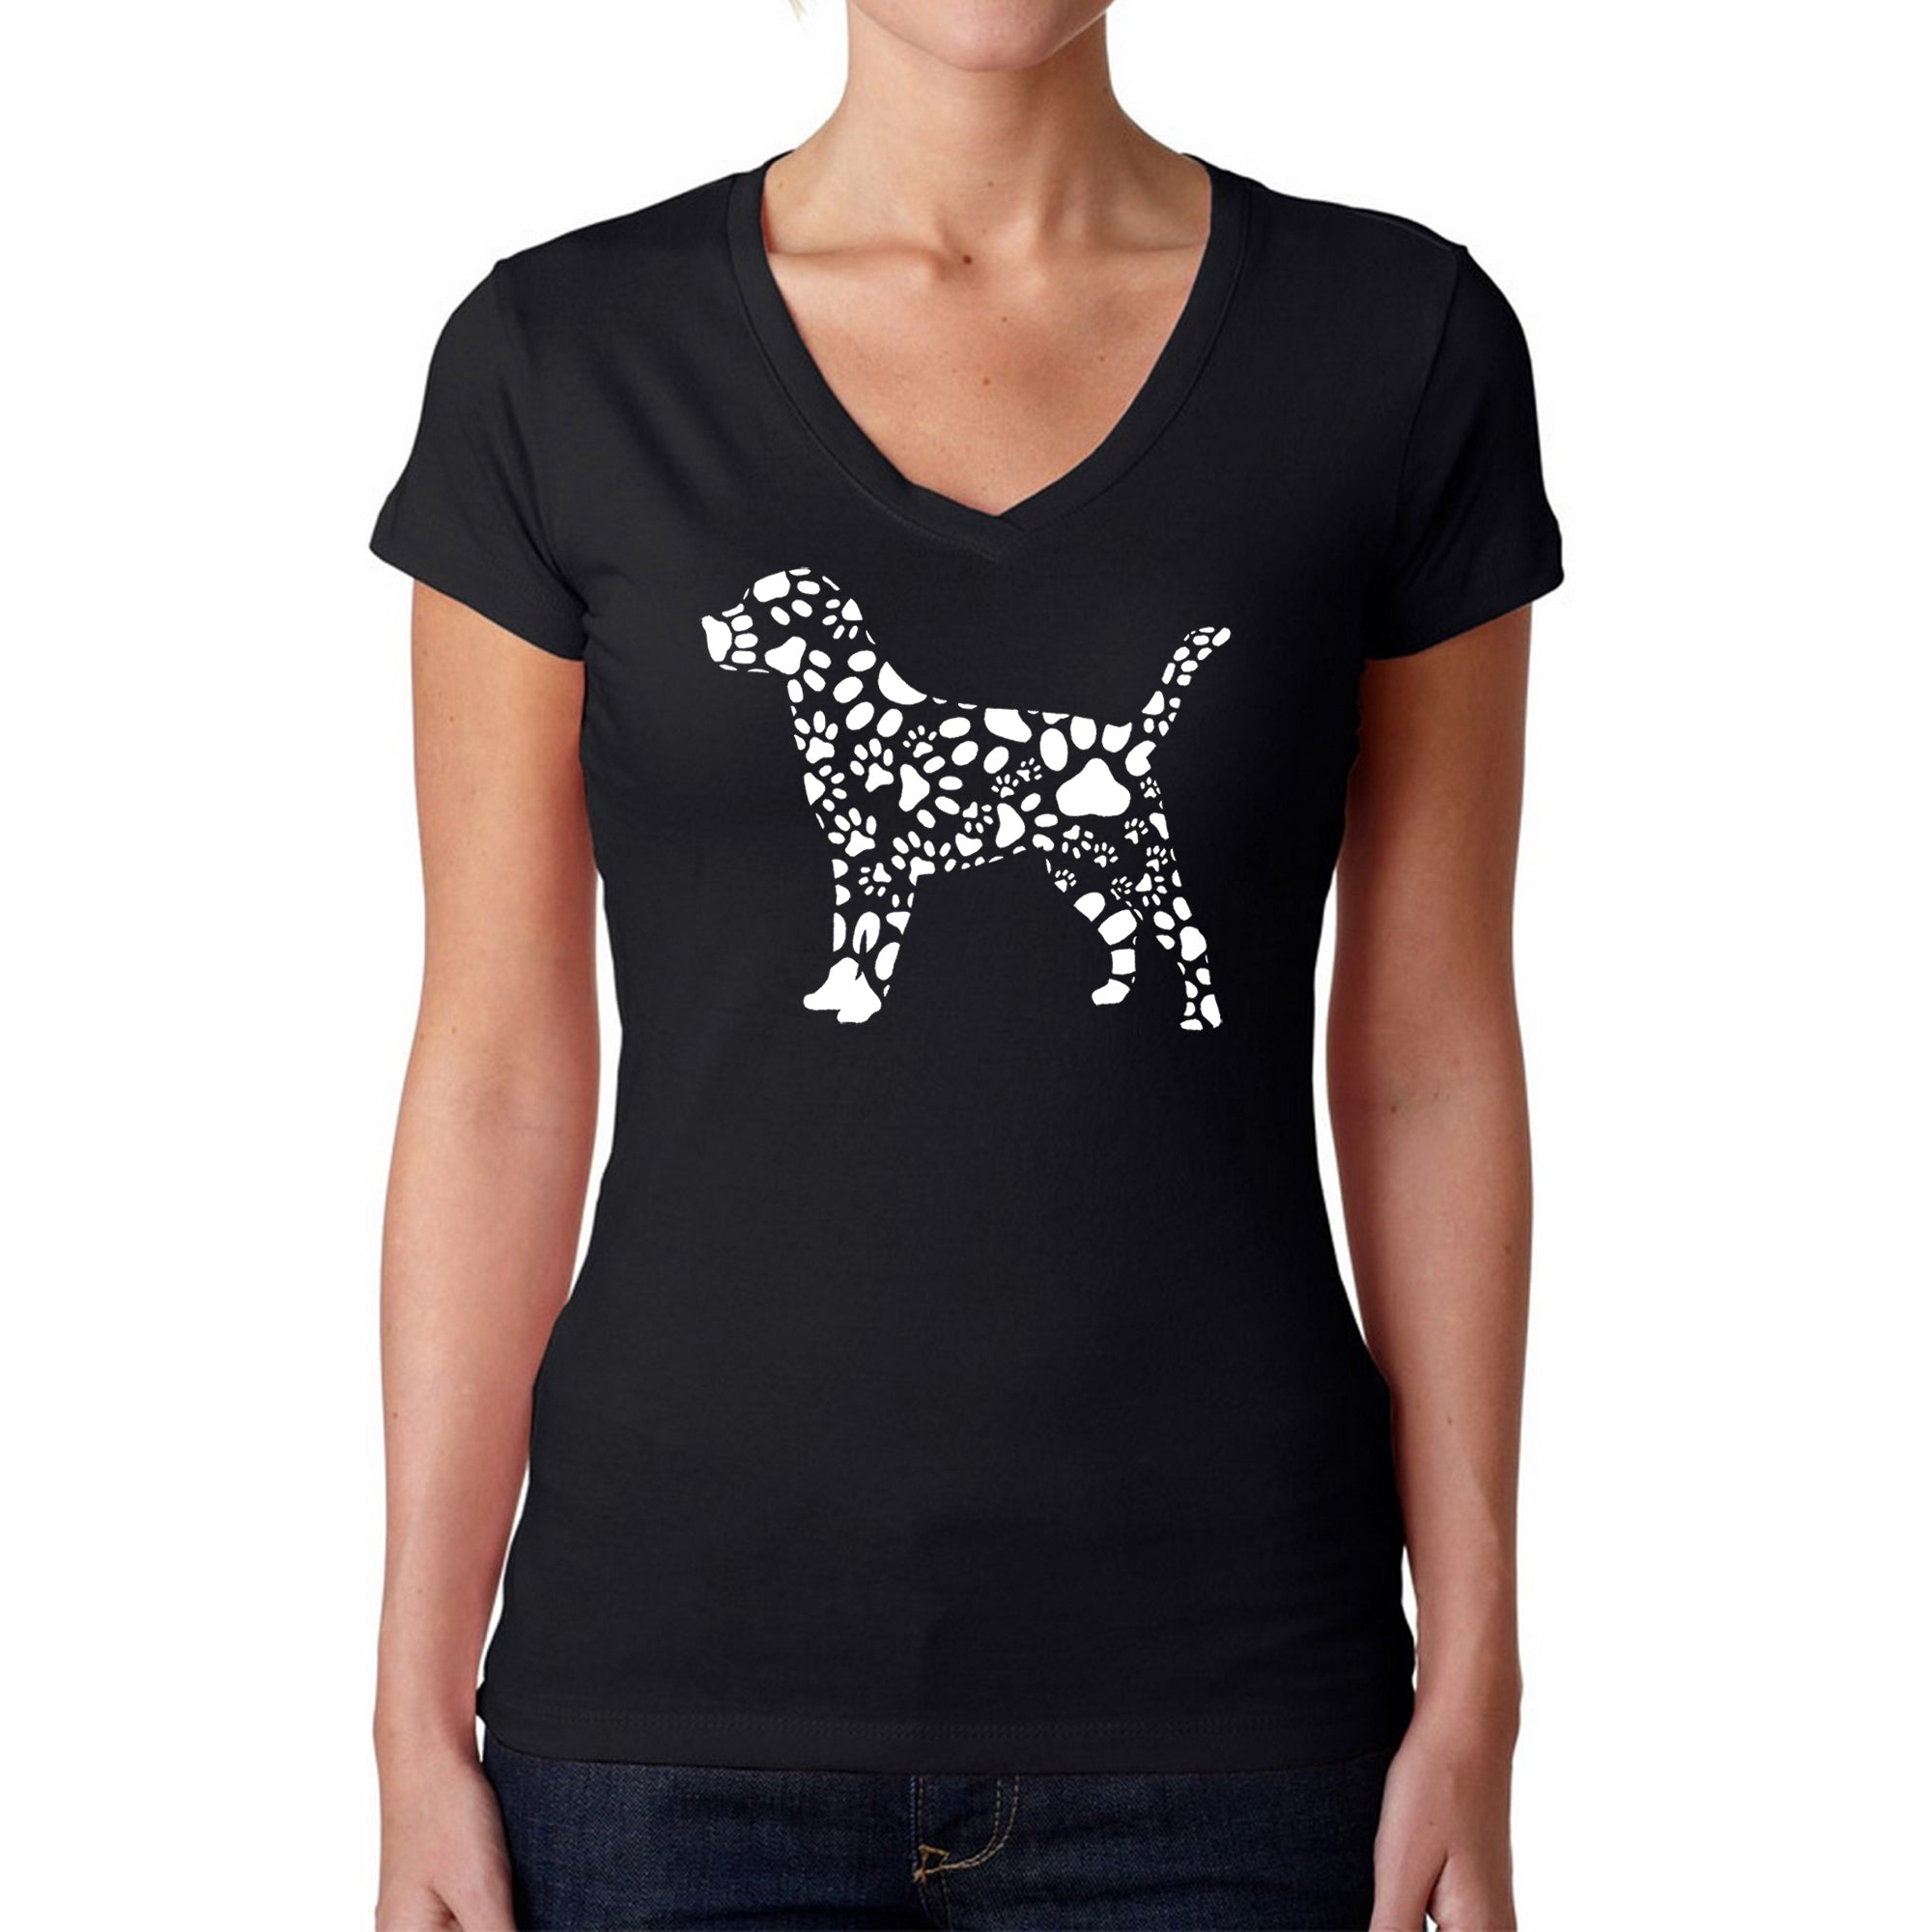 Dog Paw Prints - Women's Word Art V-Neck T-Shirt - Black - X-Large